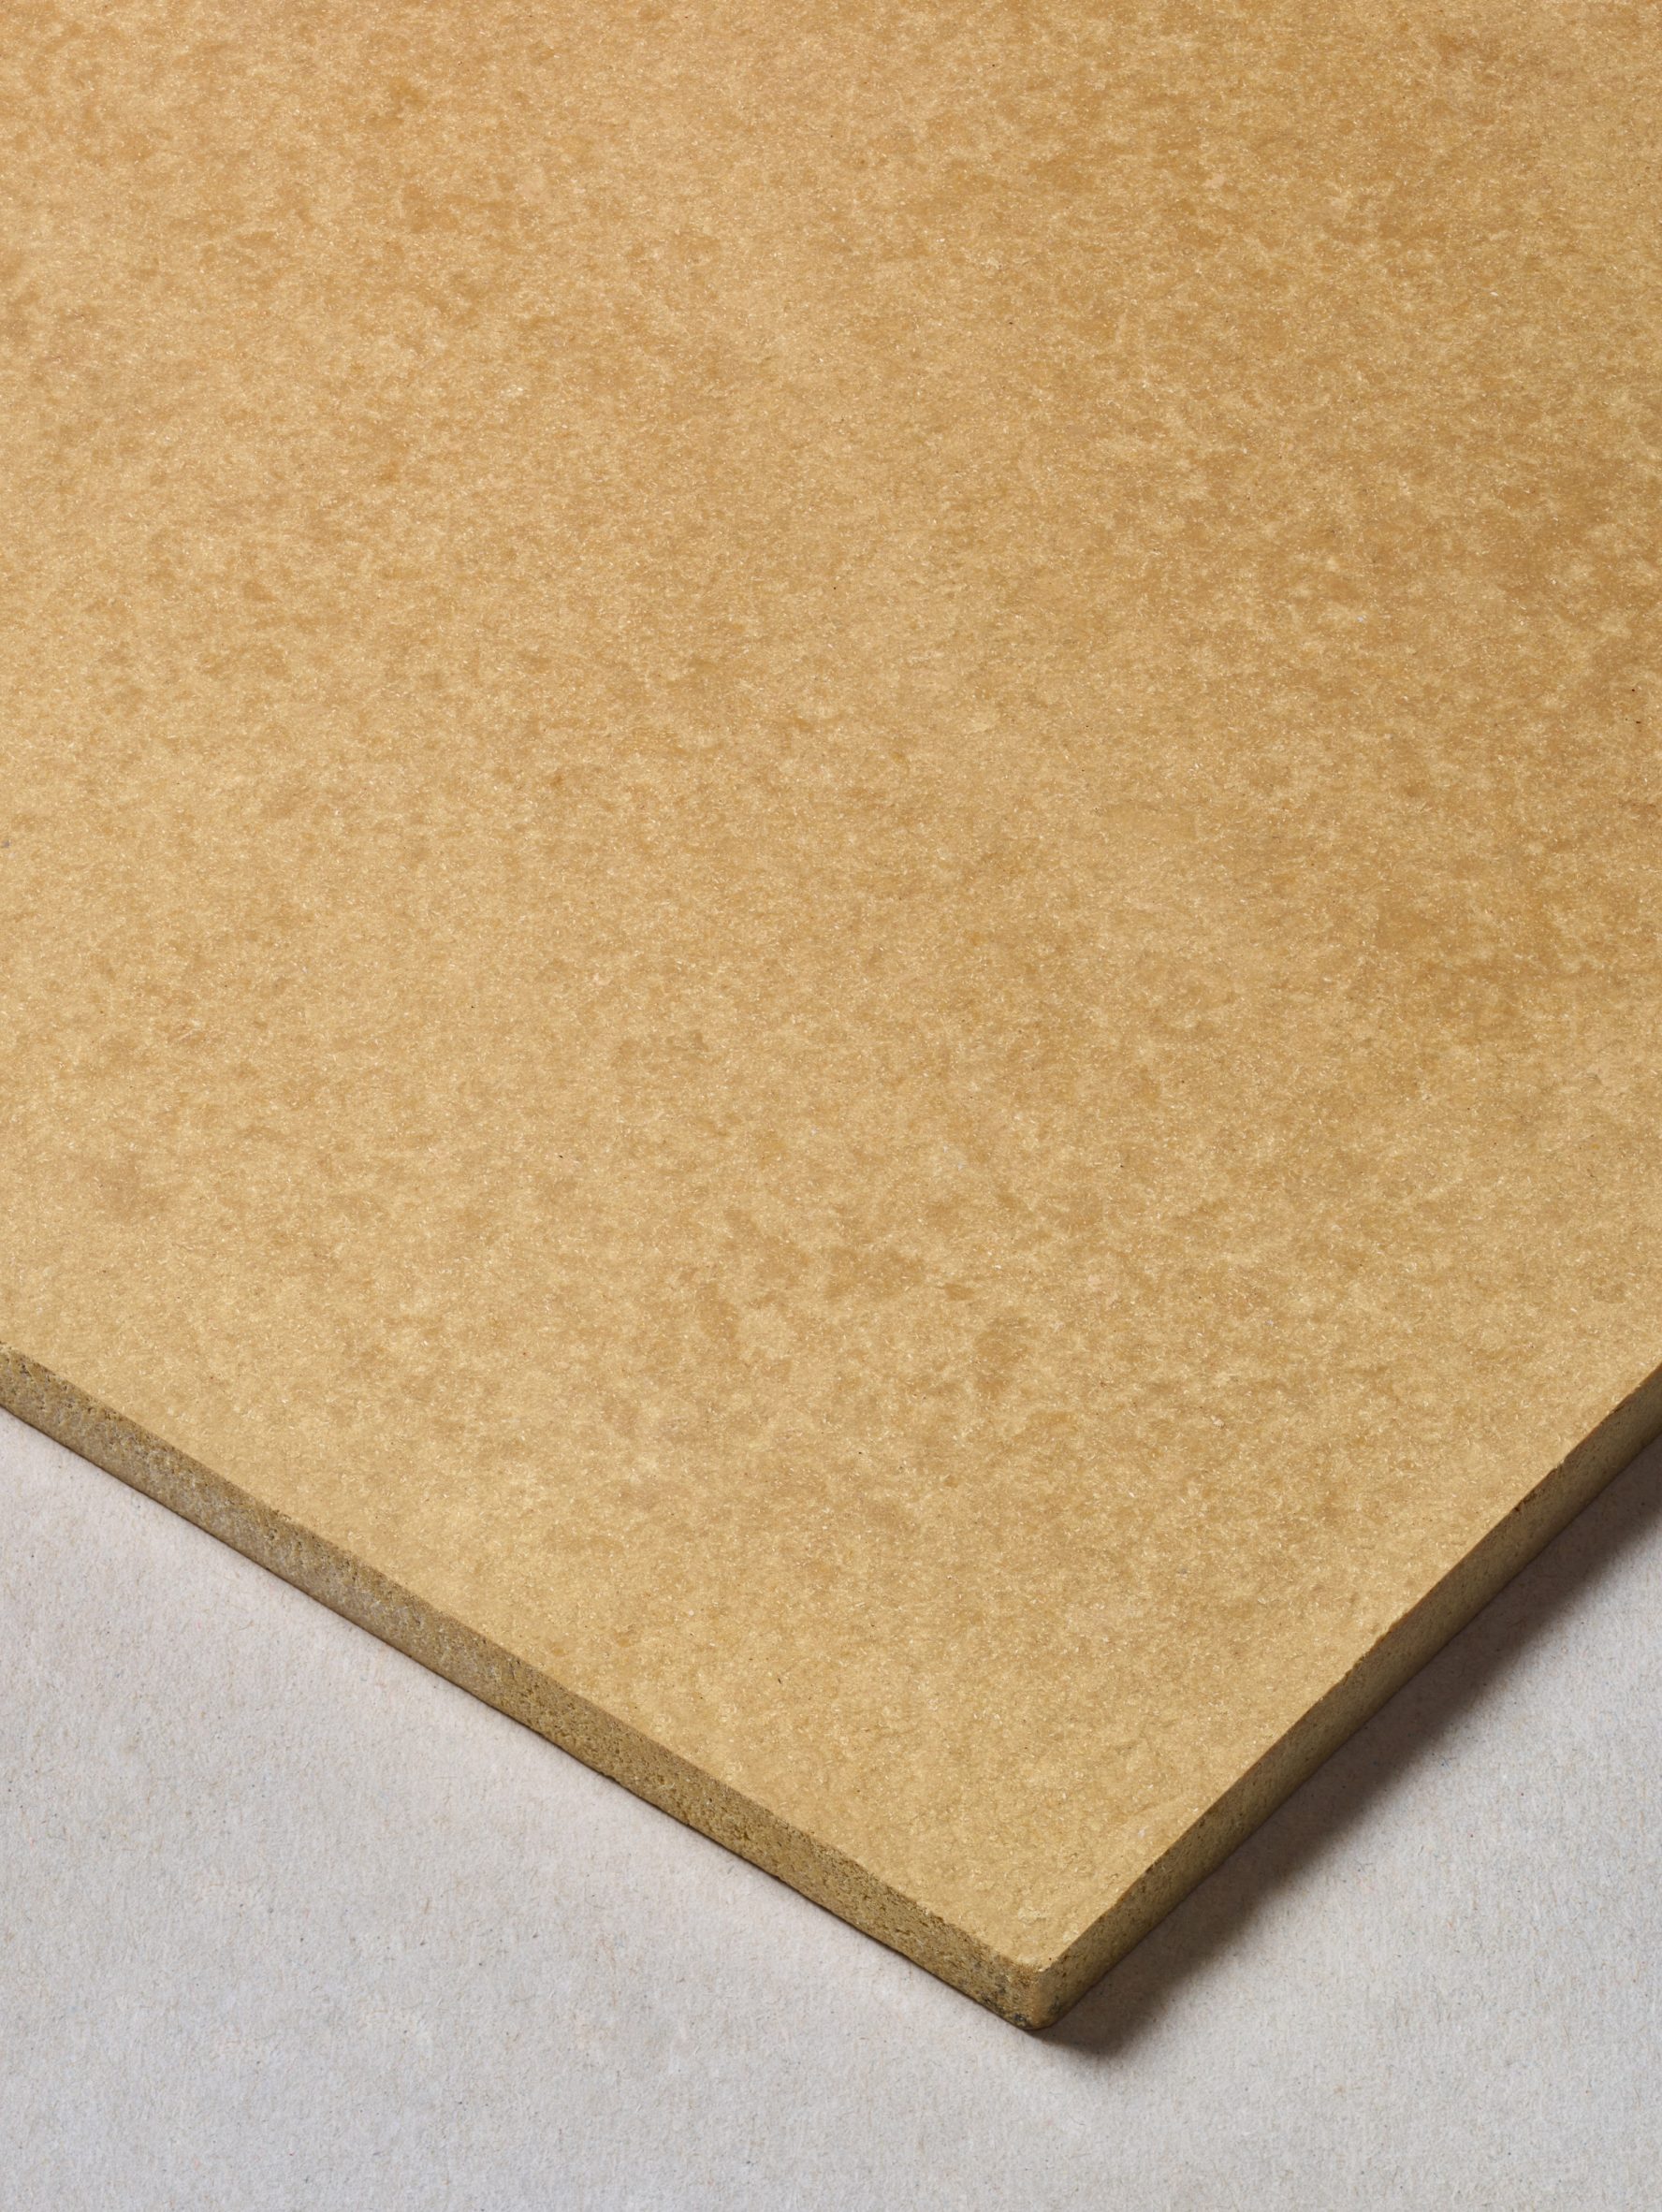 Close-up of linoleum tile